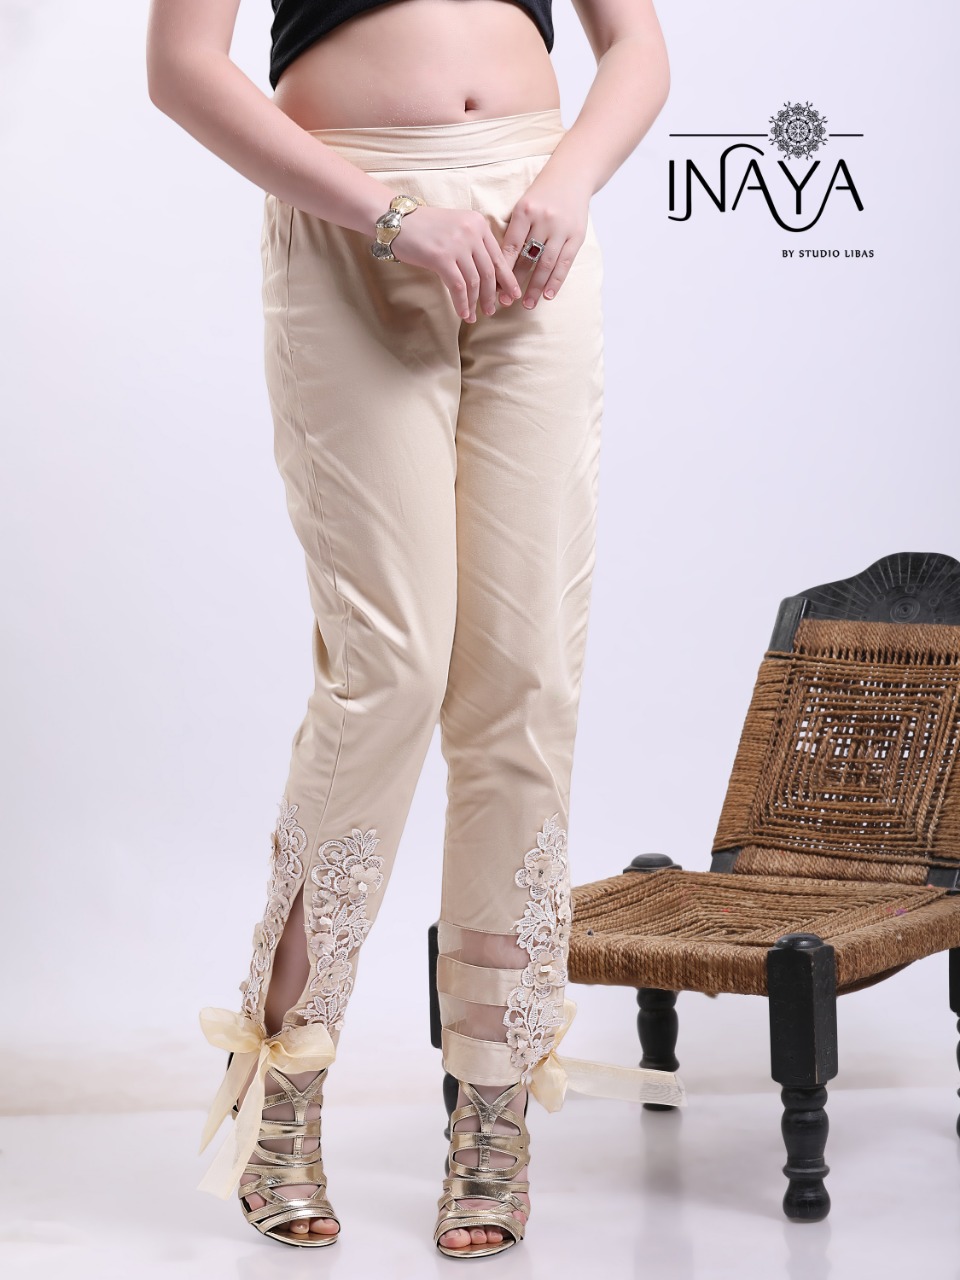 Inaya by studio libas presenting stylish cigarette pants concept